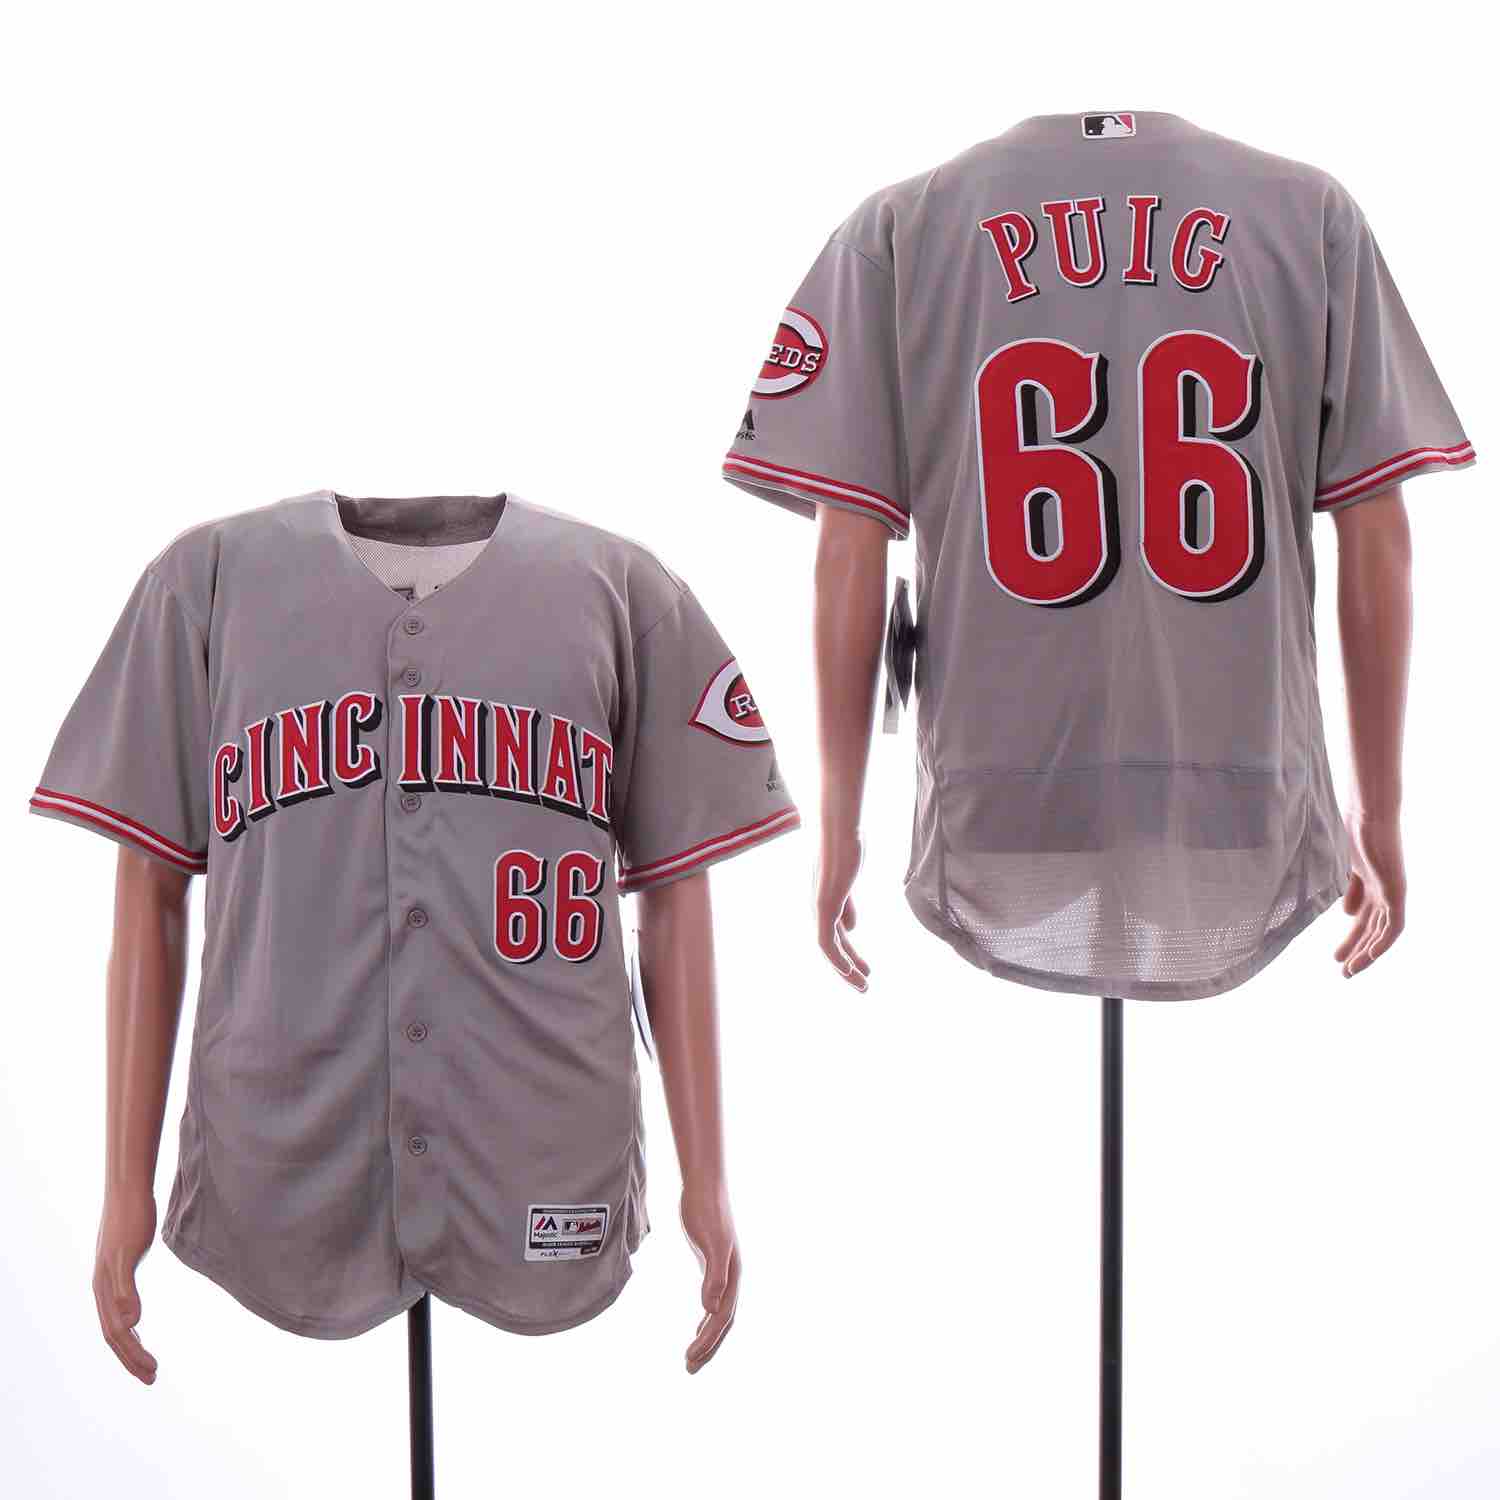 MLB Cincinnati Reds #66 Puig Grey Jersey